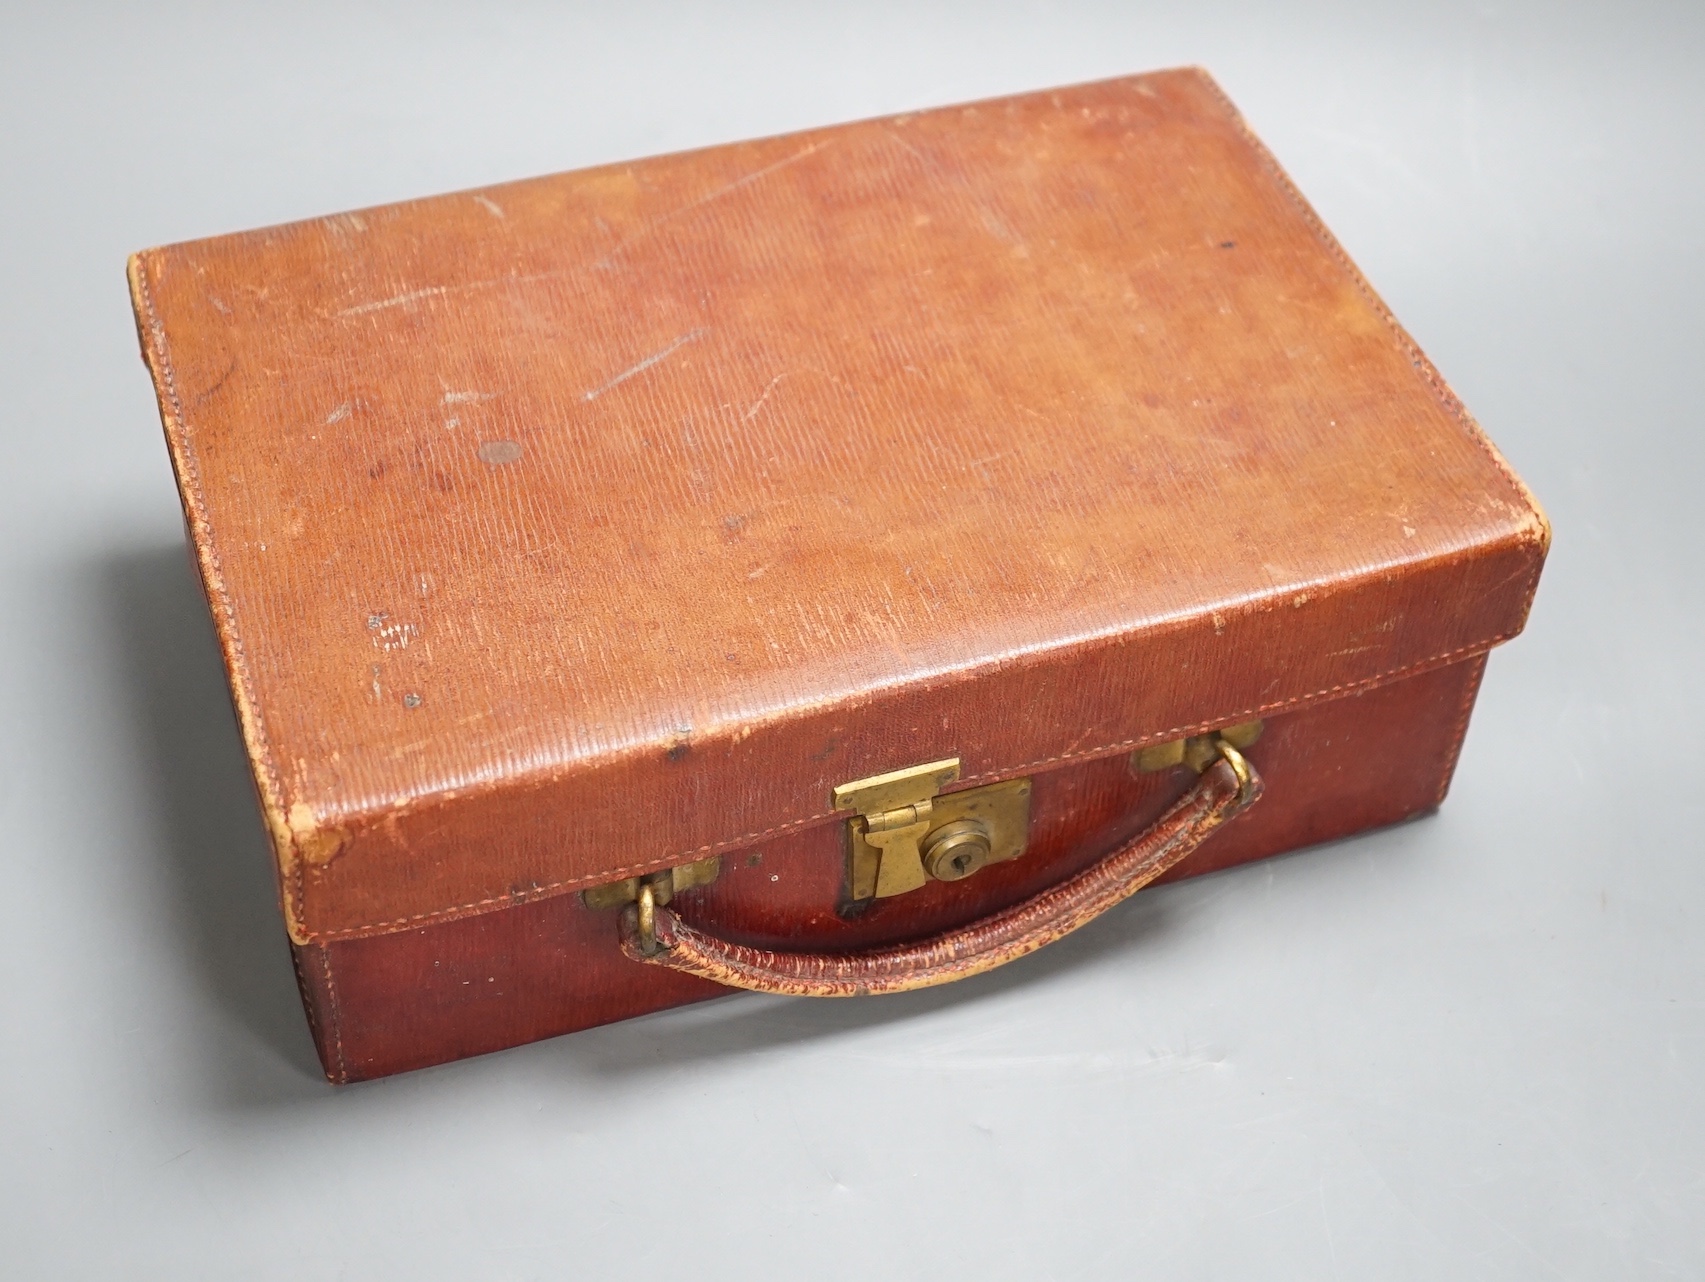 A Vintage Asprey red leather case, 28cm - Image 2 of 4